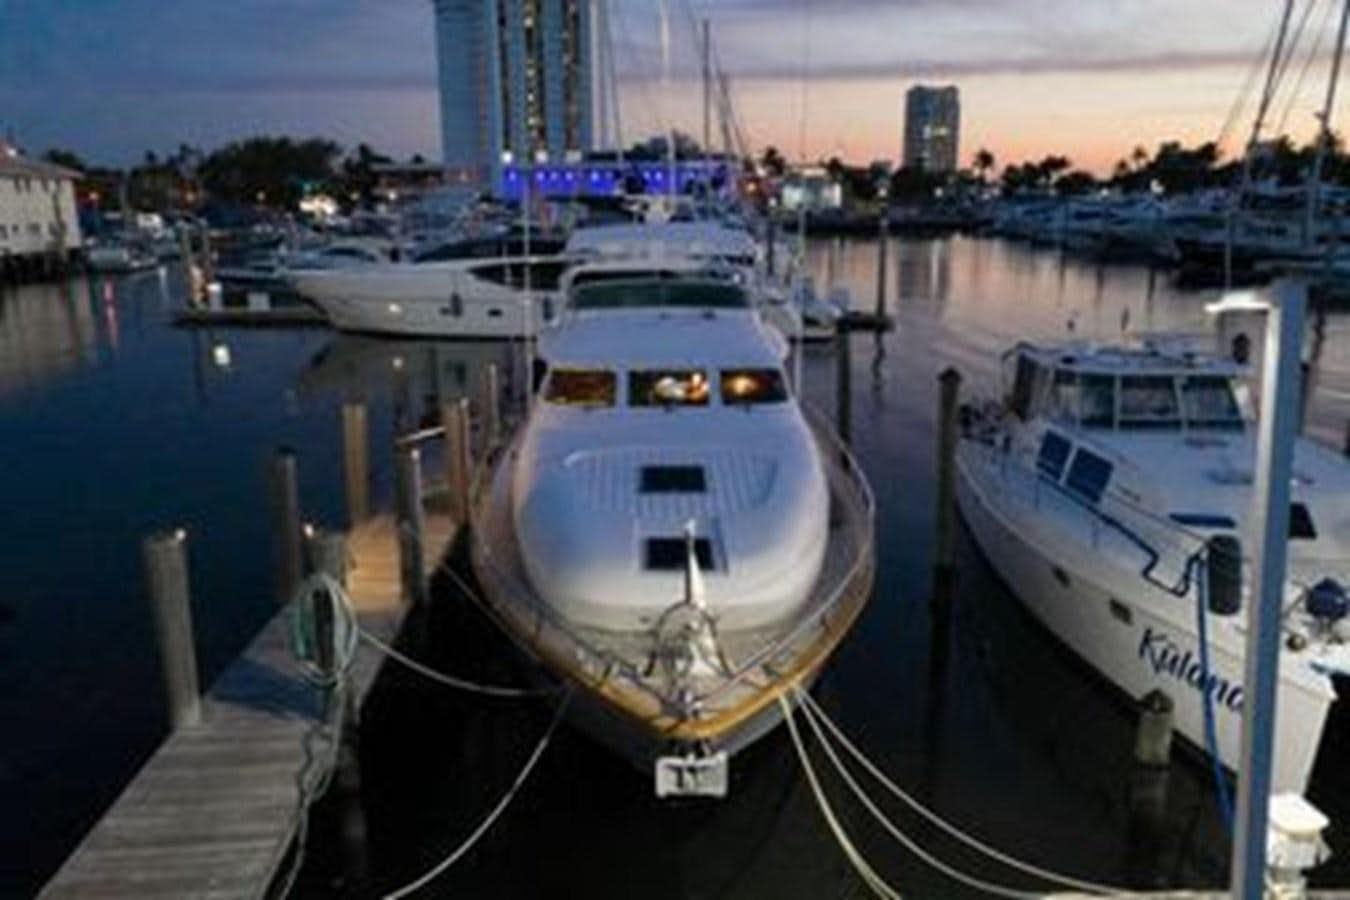 1997 maiora fipa 70' flybridge
Yacht for Sale